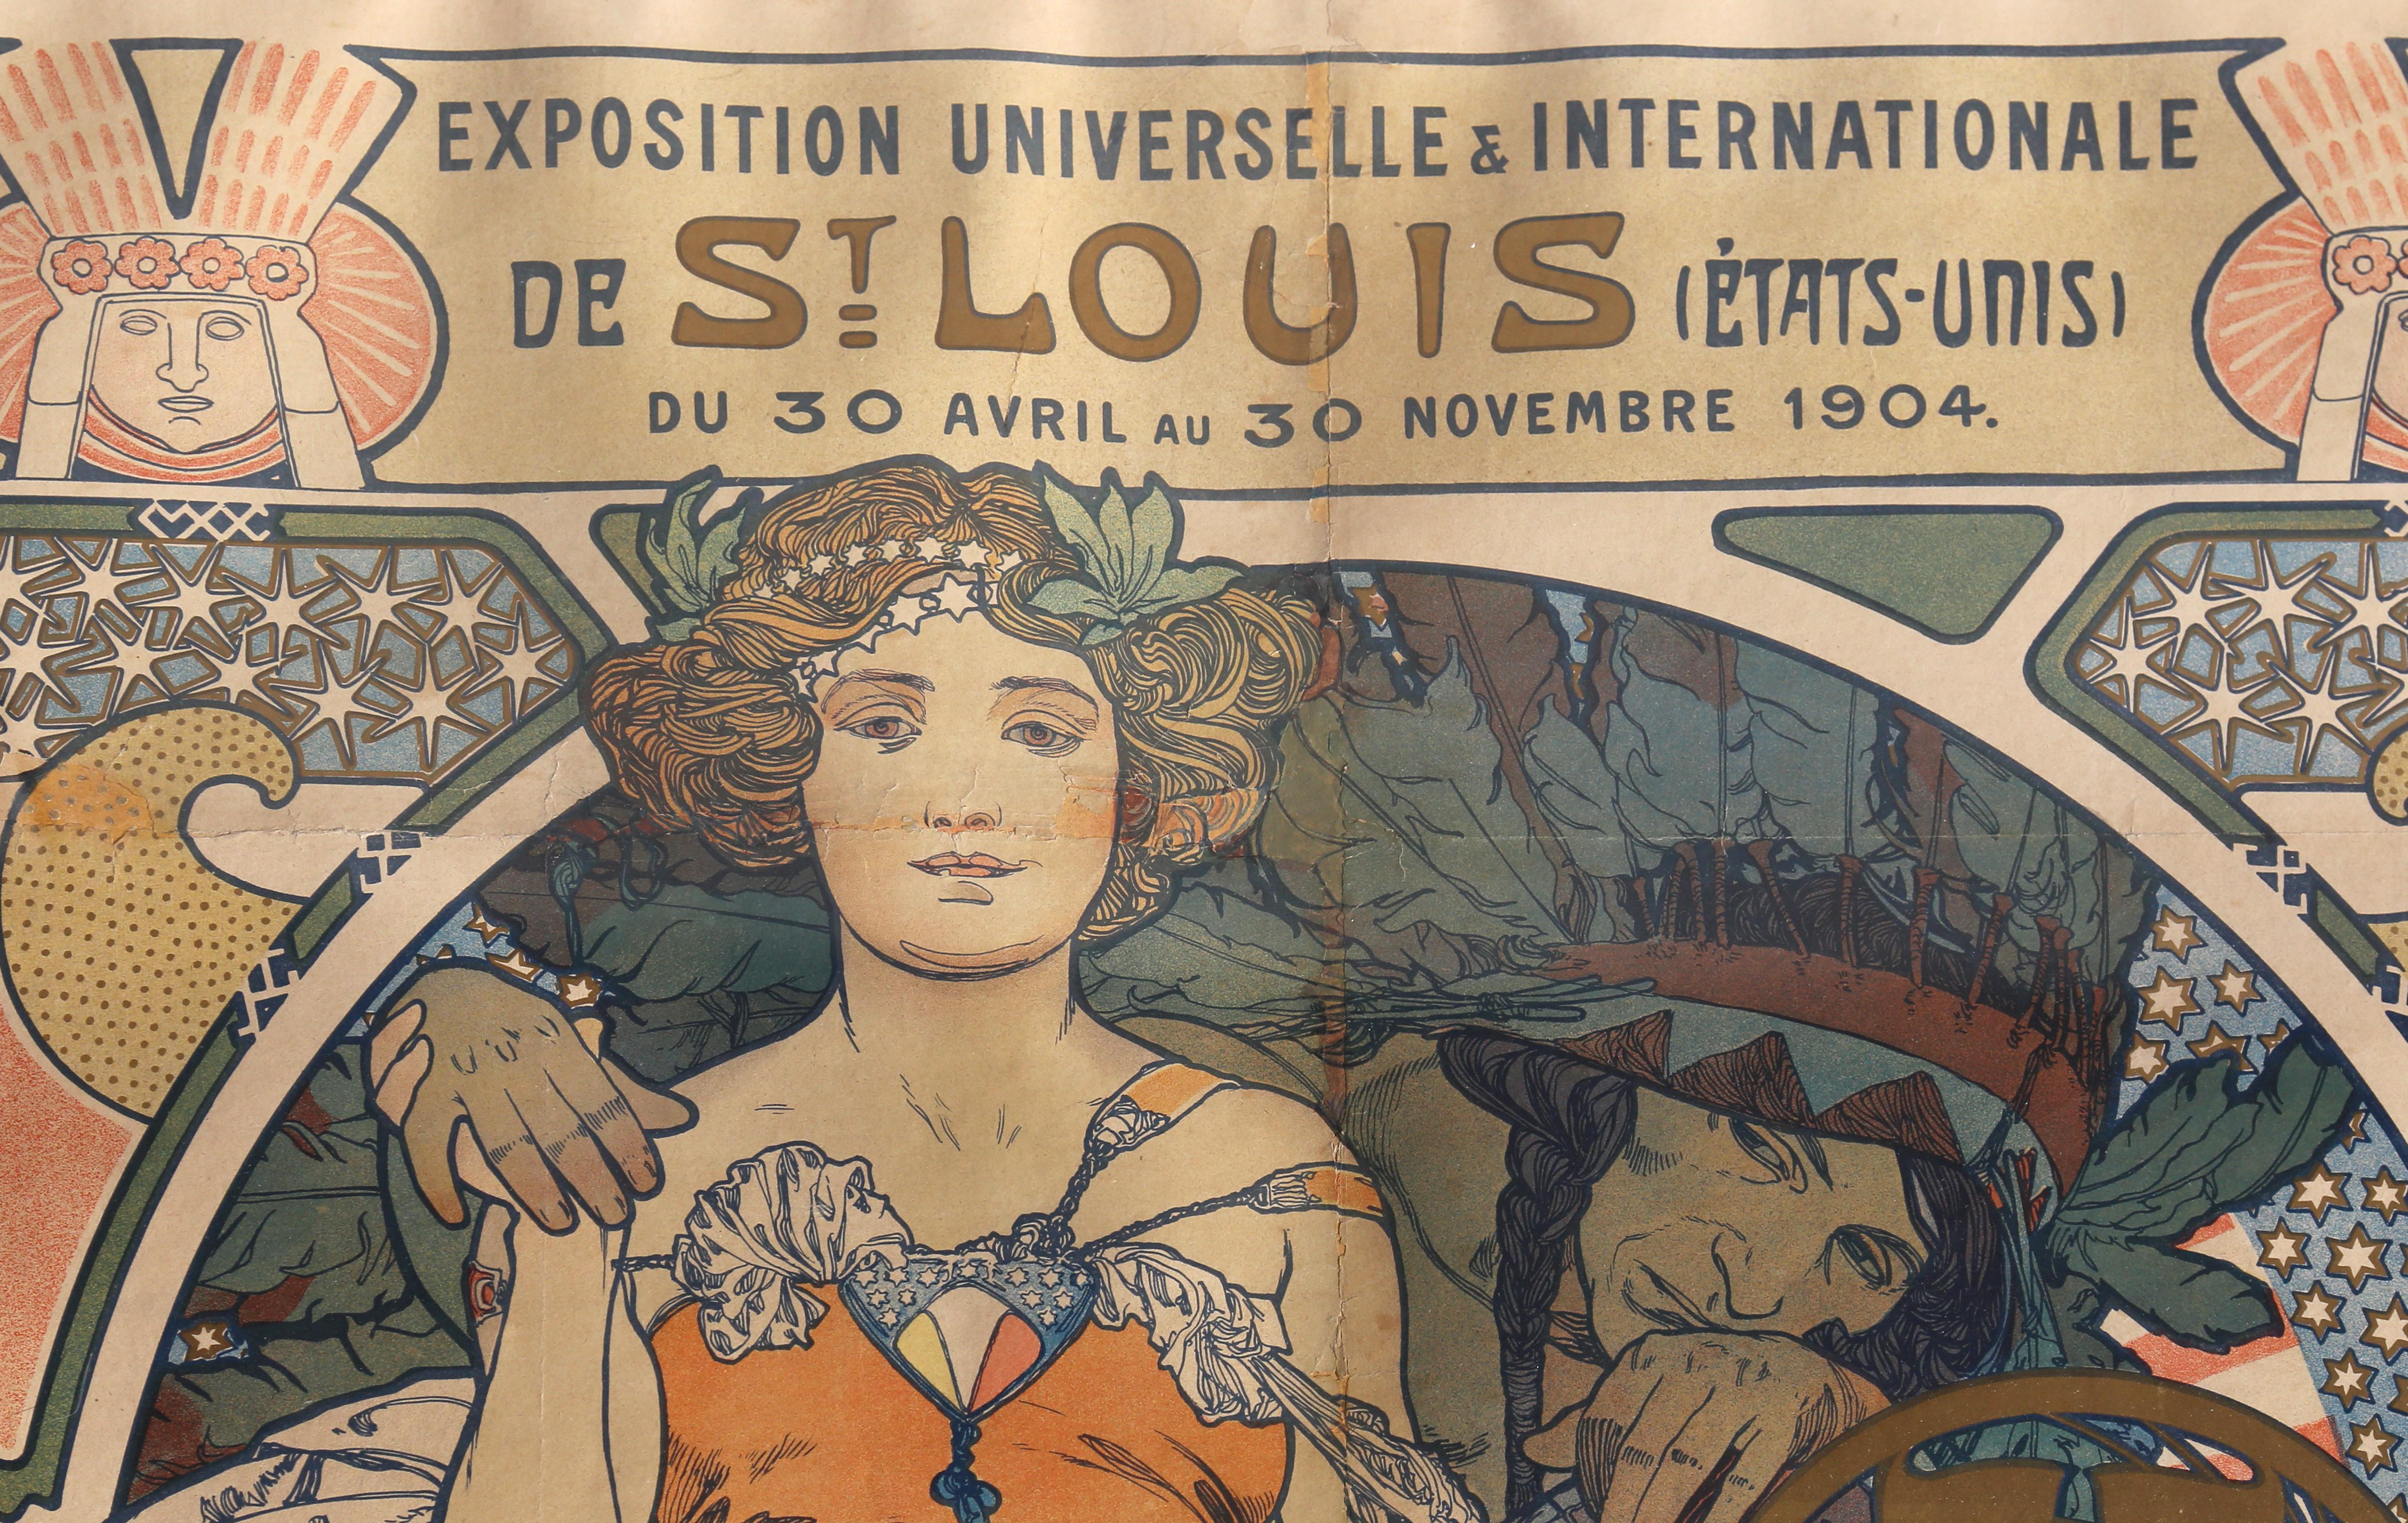 Exposition de St. Louis - Print by Alphonse Mucha